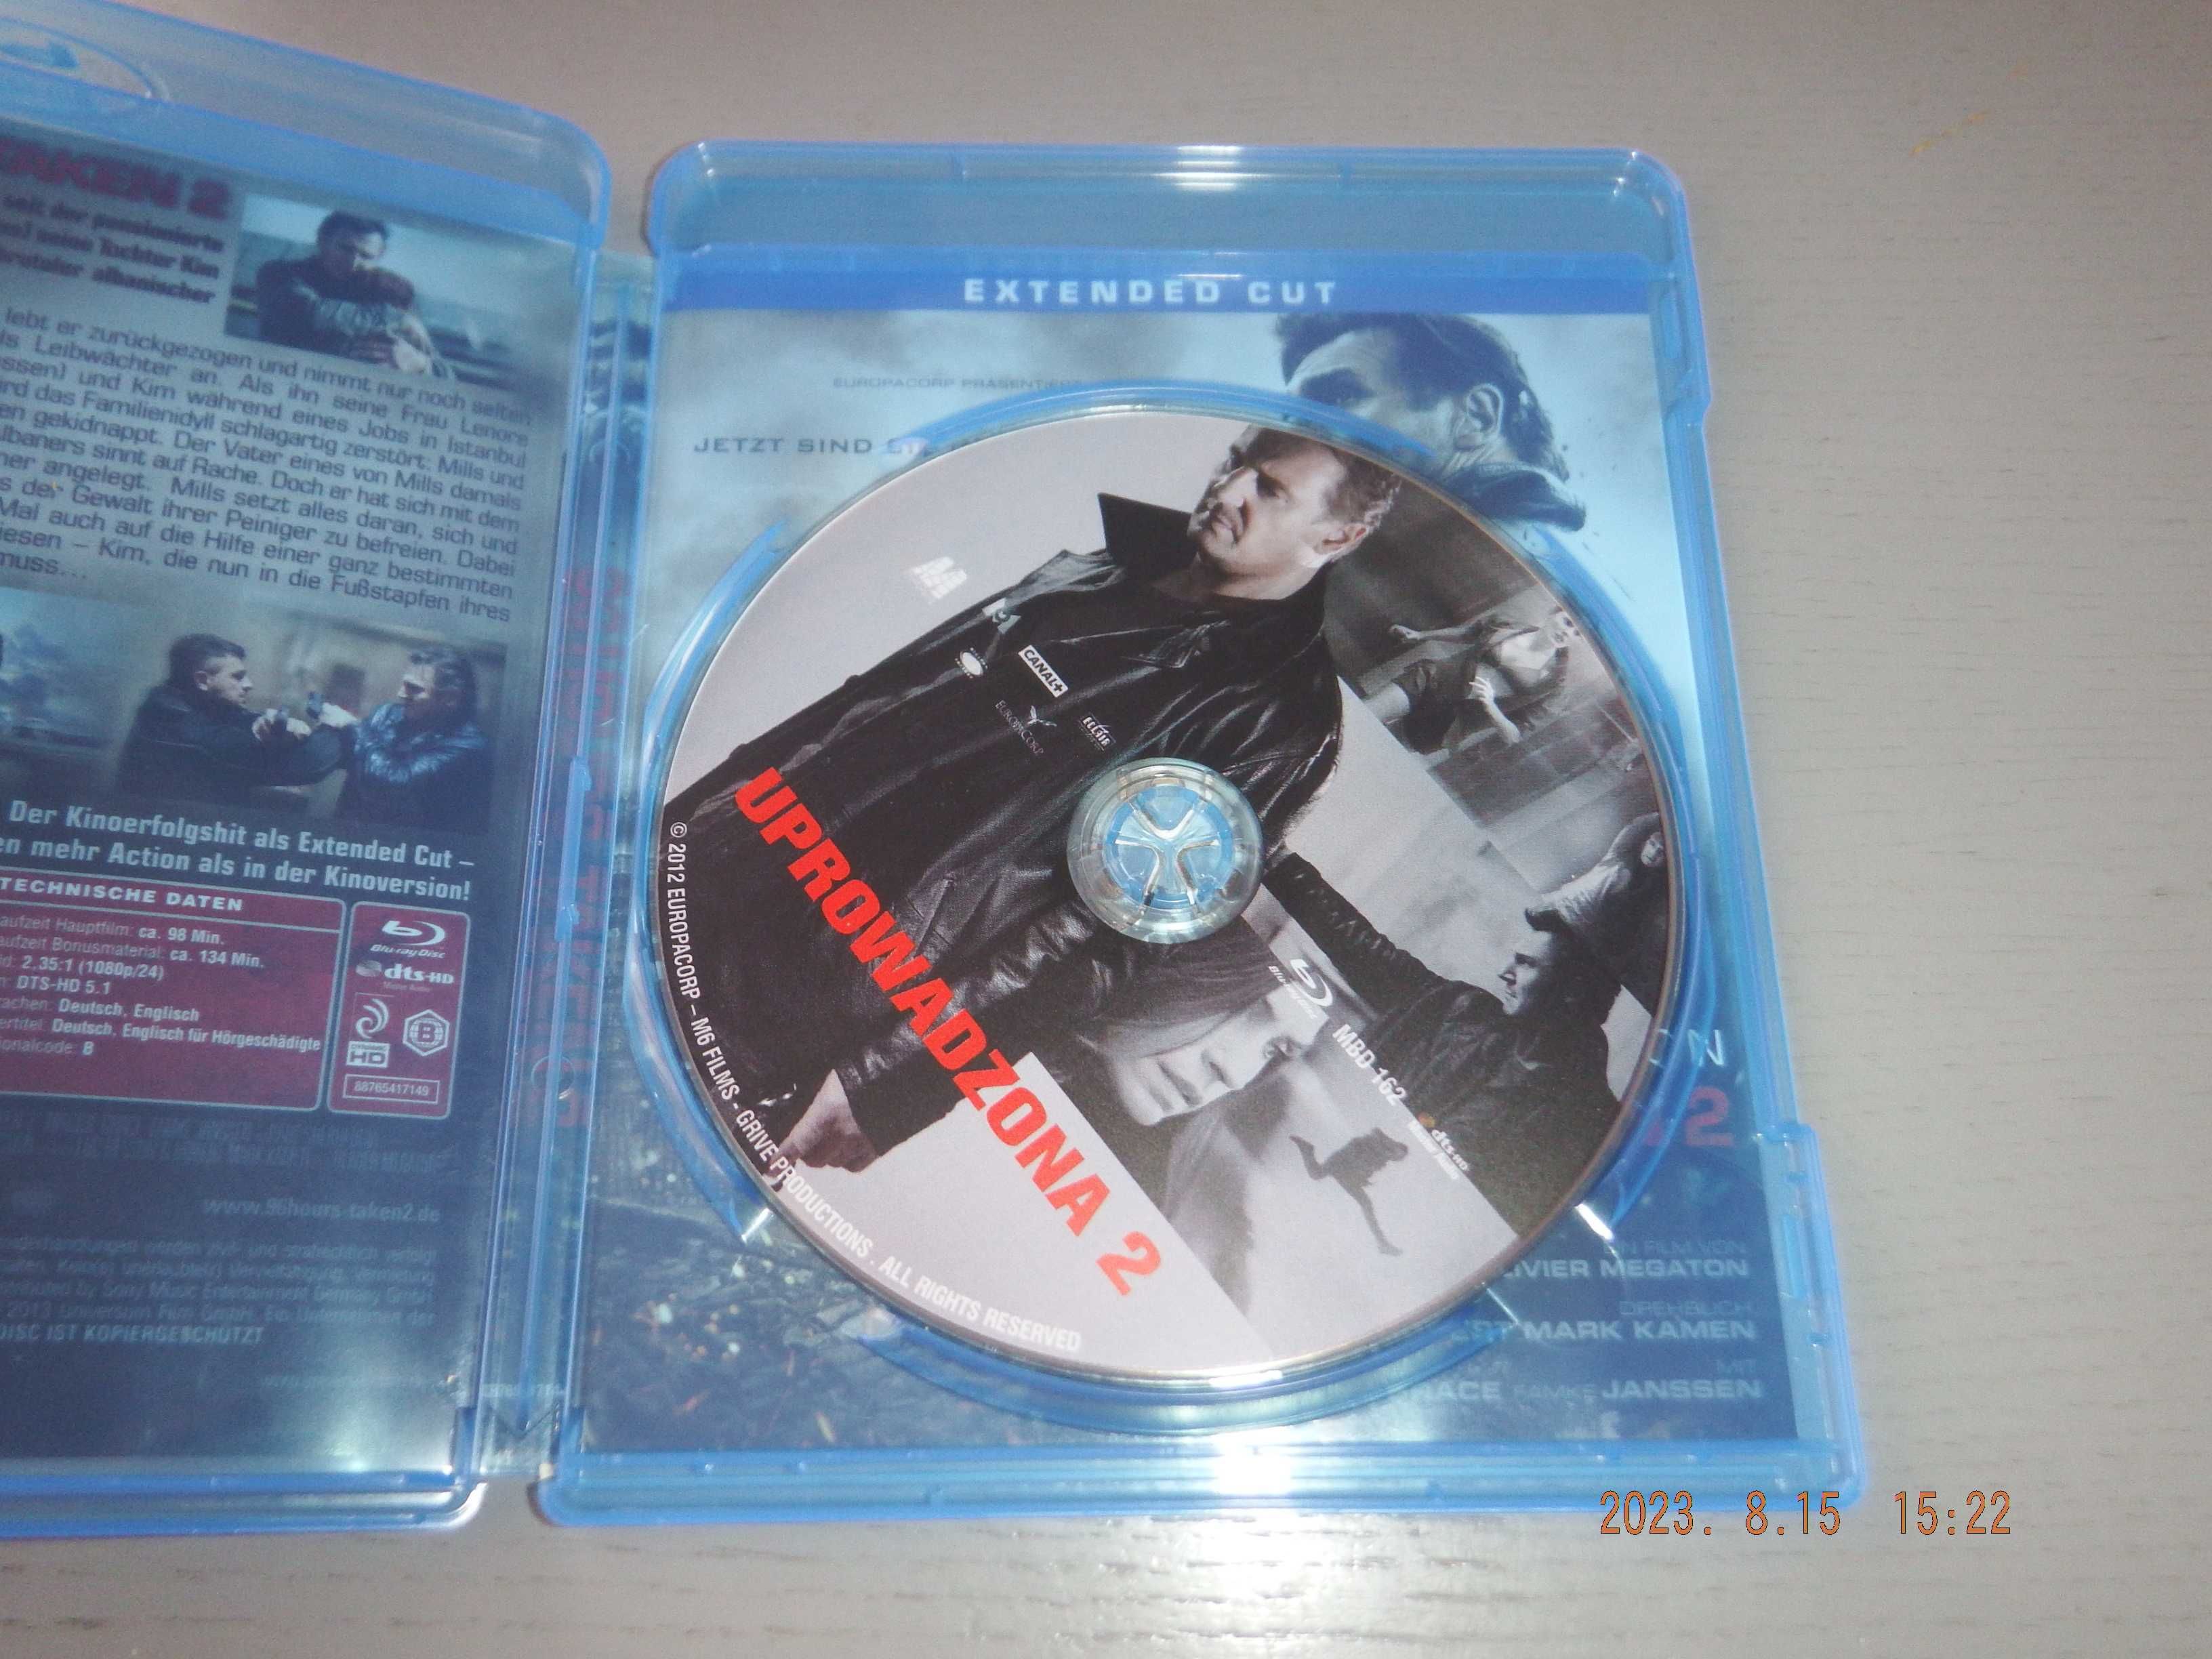 UPROWADZONA 2  dvd  Liam Neeson